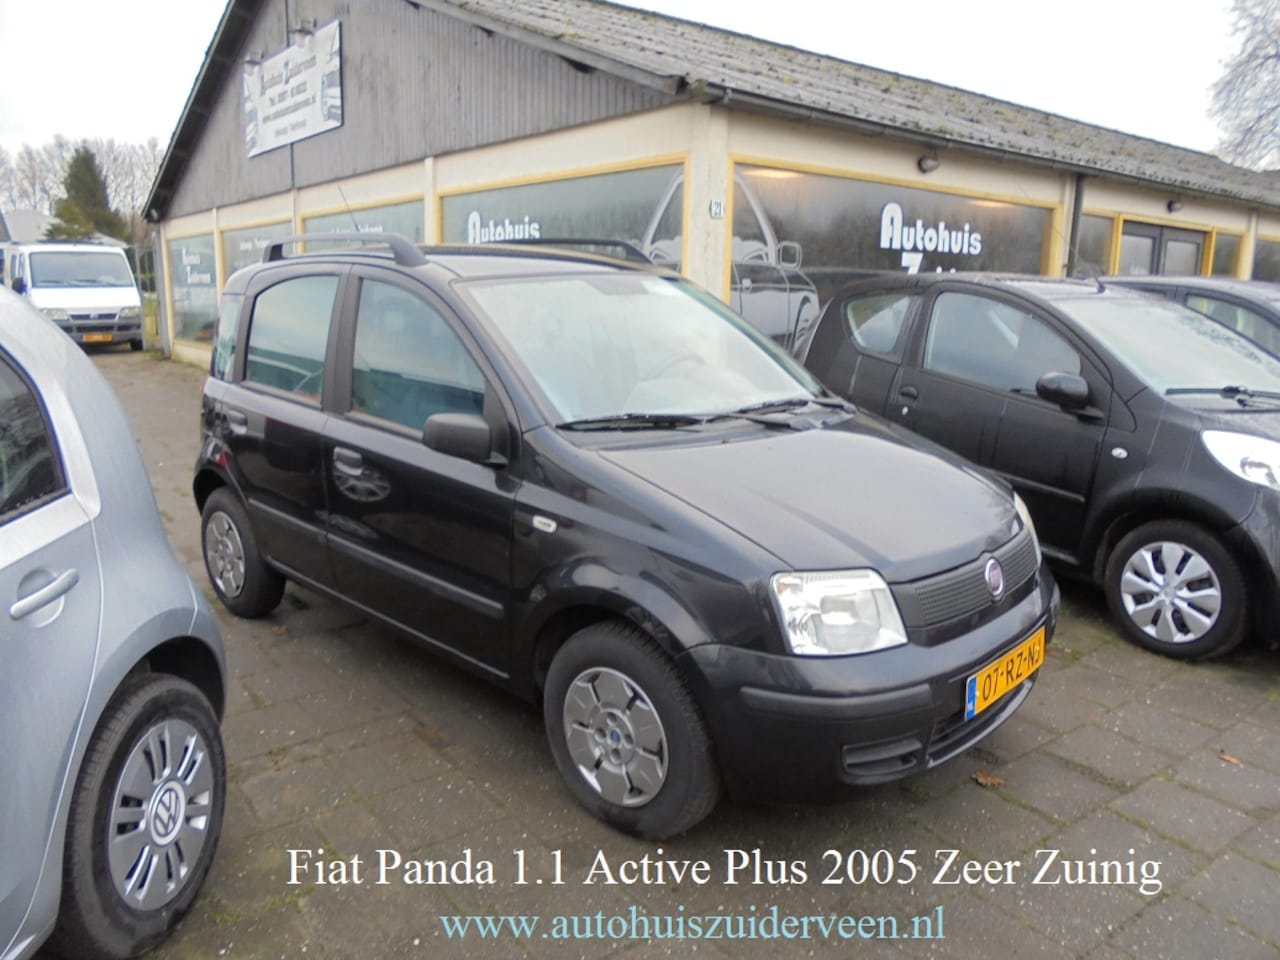 Fiat Panda - 1.1 Active Plus 2005 Zéér Zuinig !!! - AutoWereld.nl